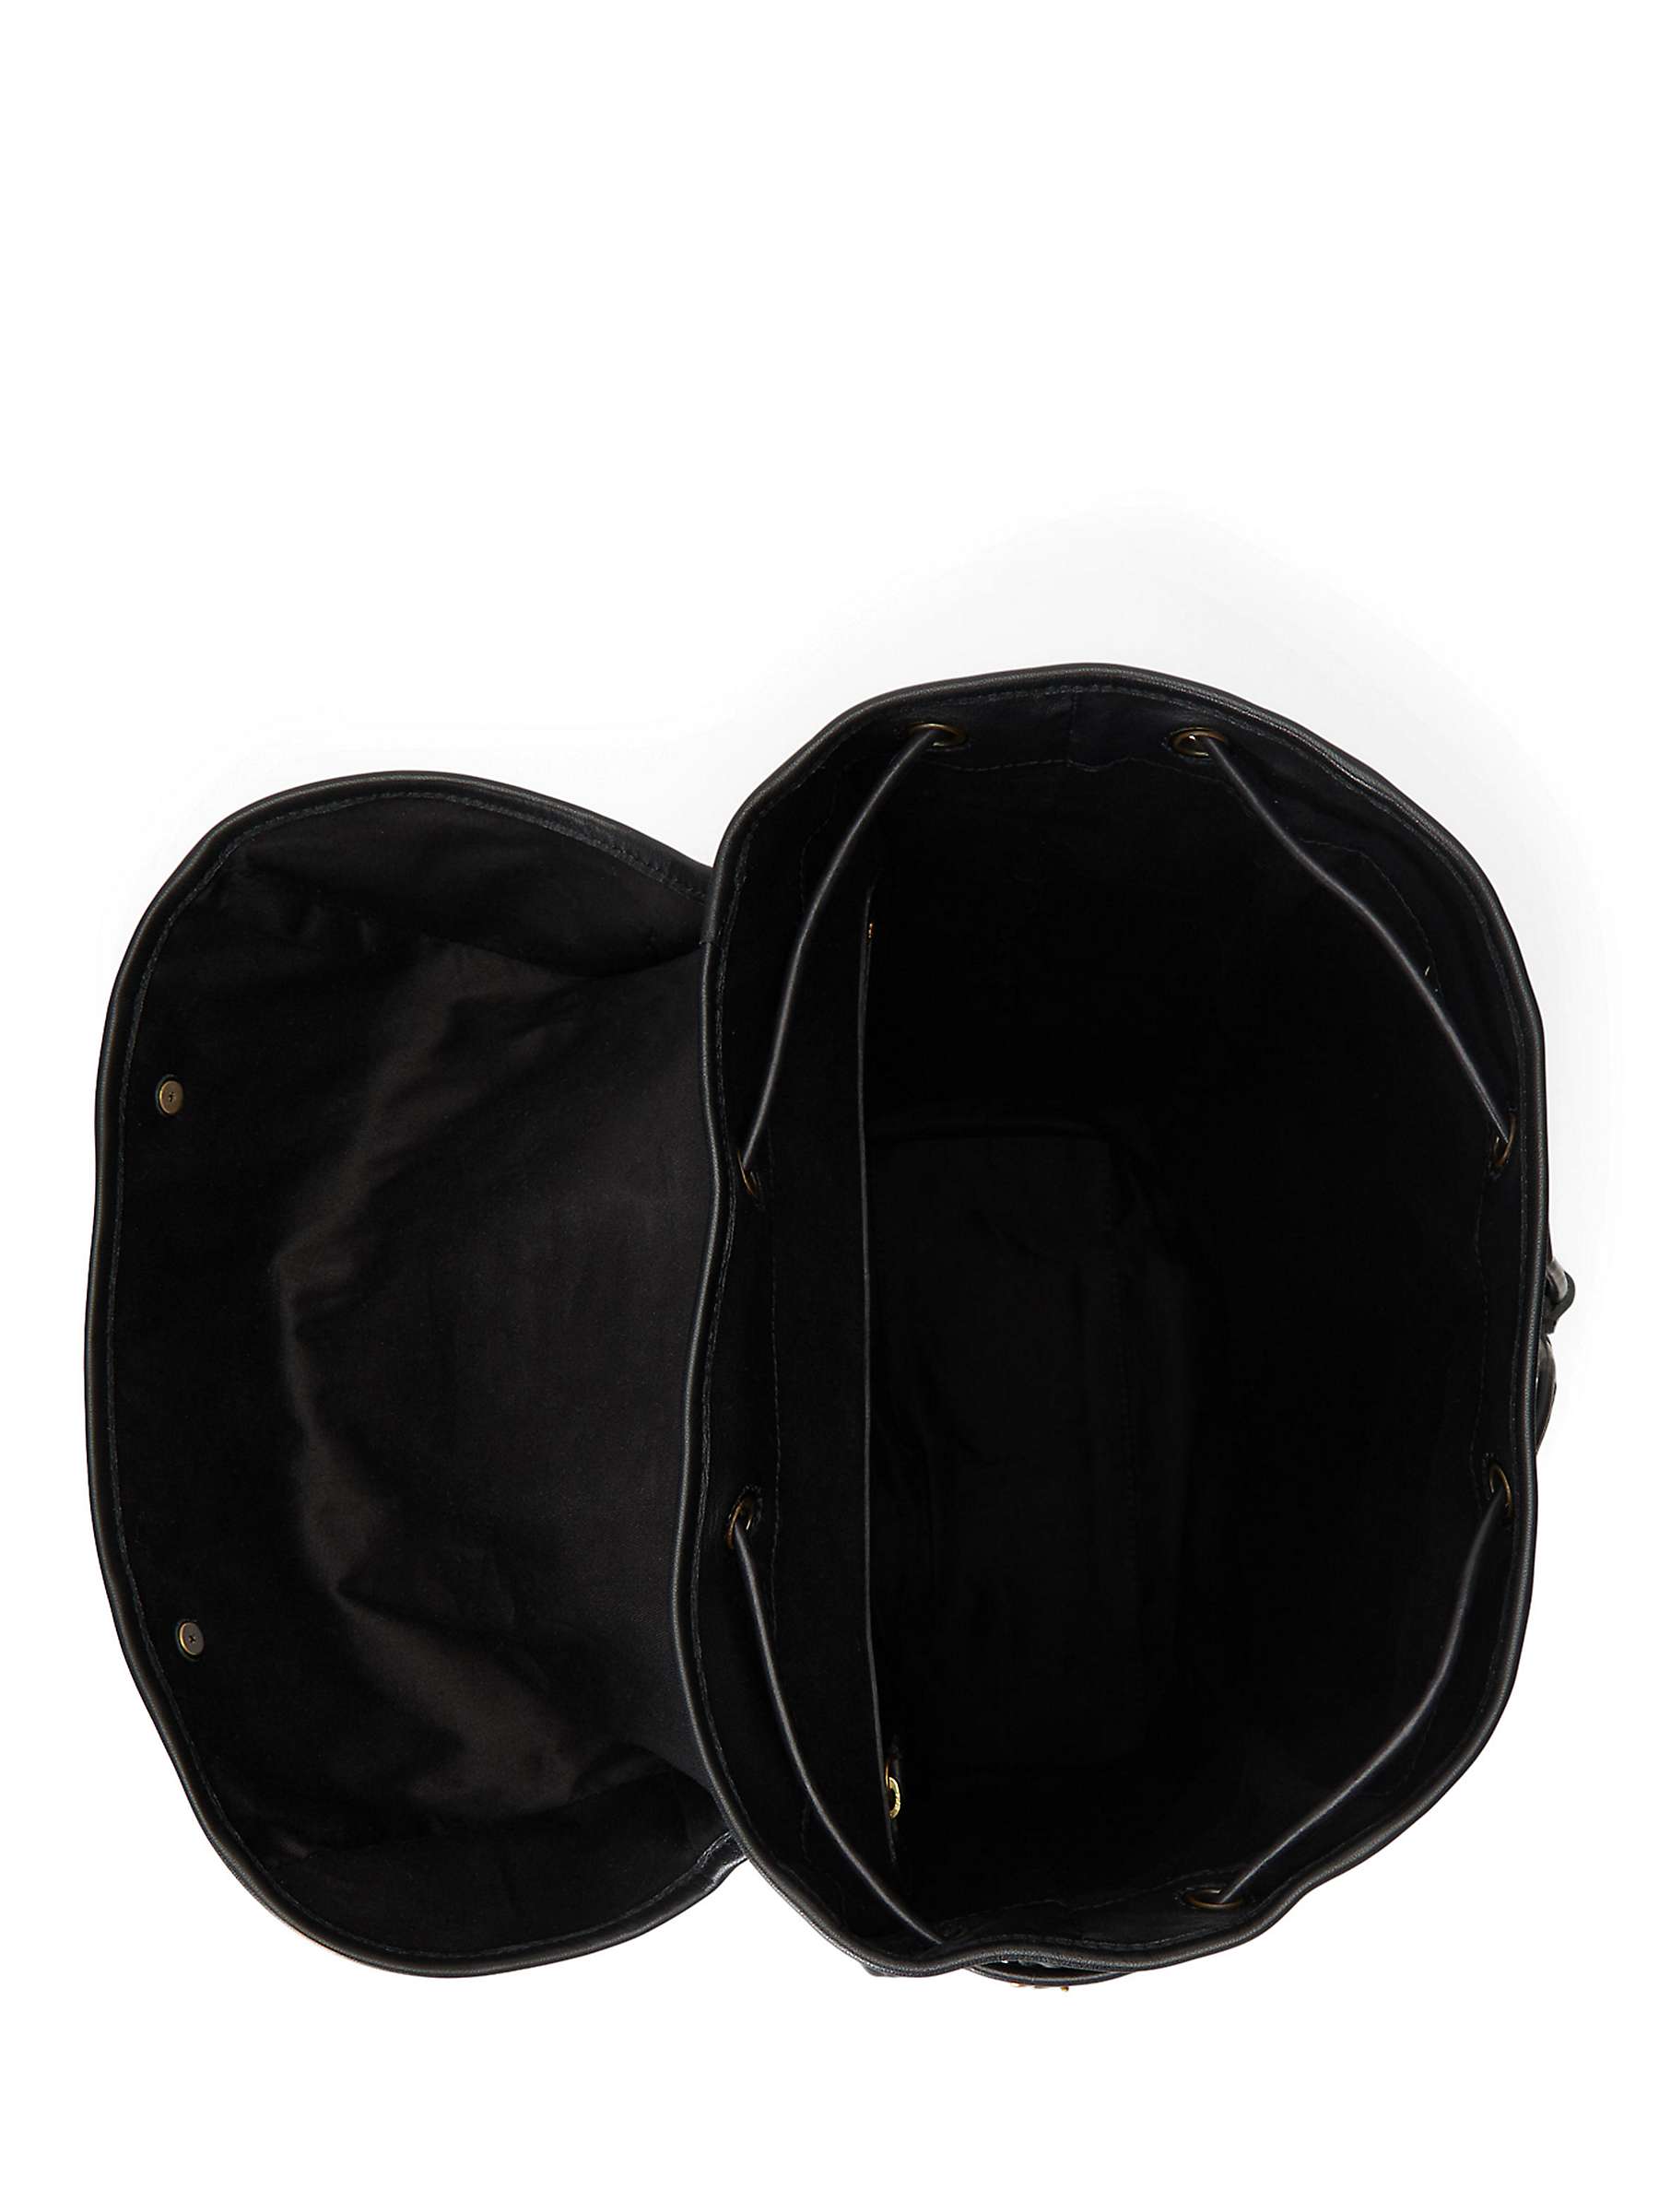 Buy Ralph Lauren Pebbled Leather Backpack Online at johnlewis.com